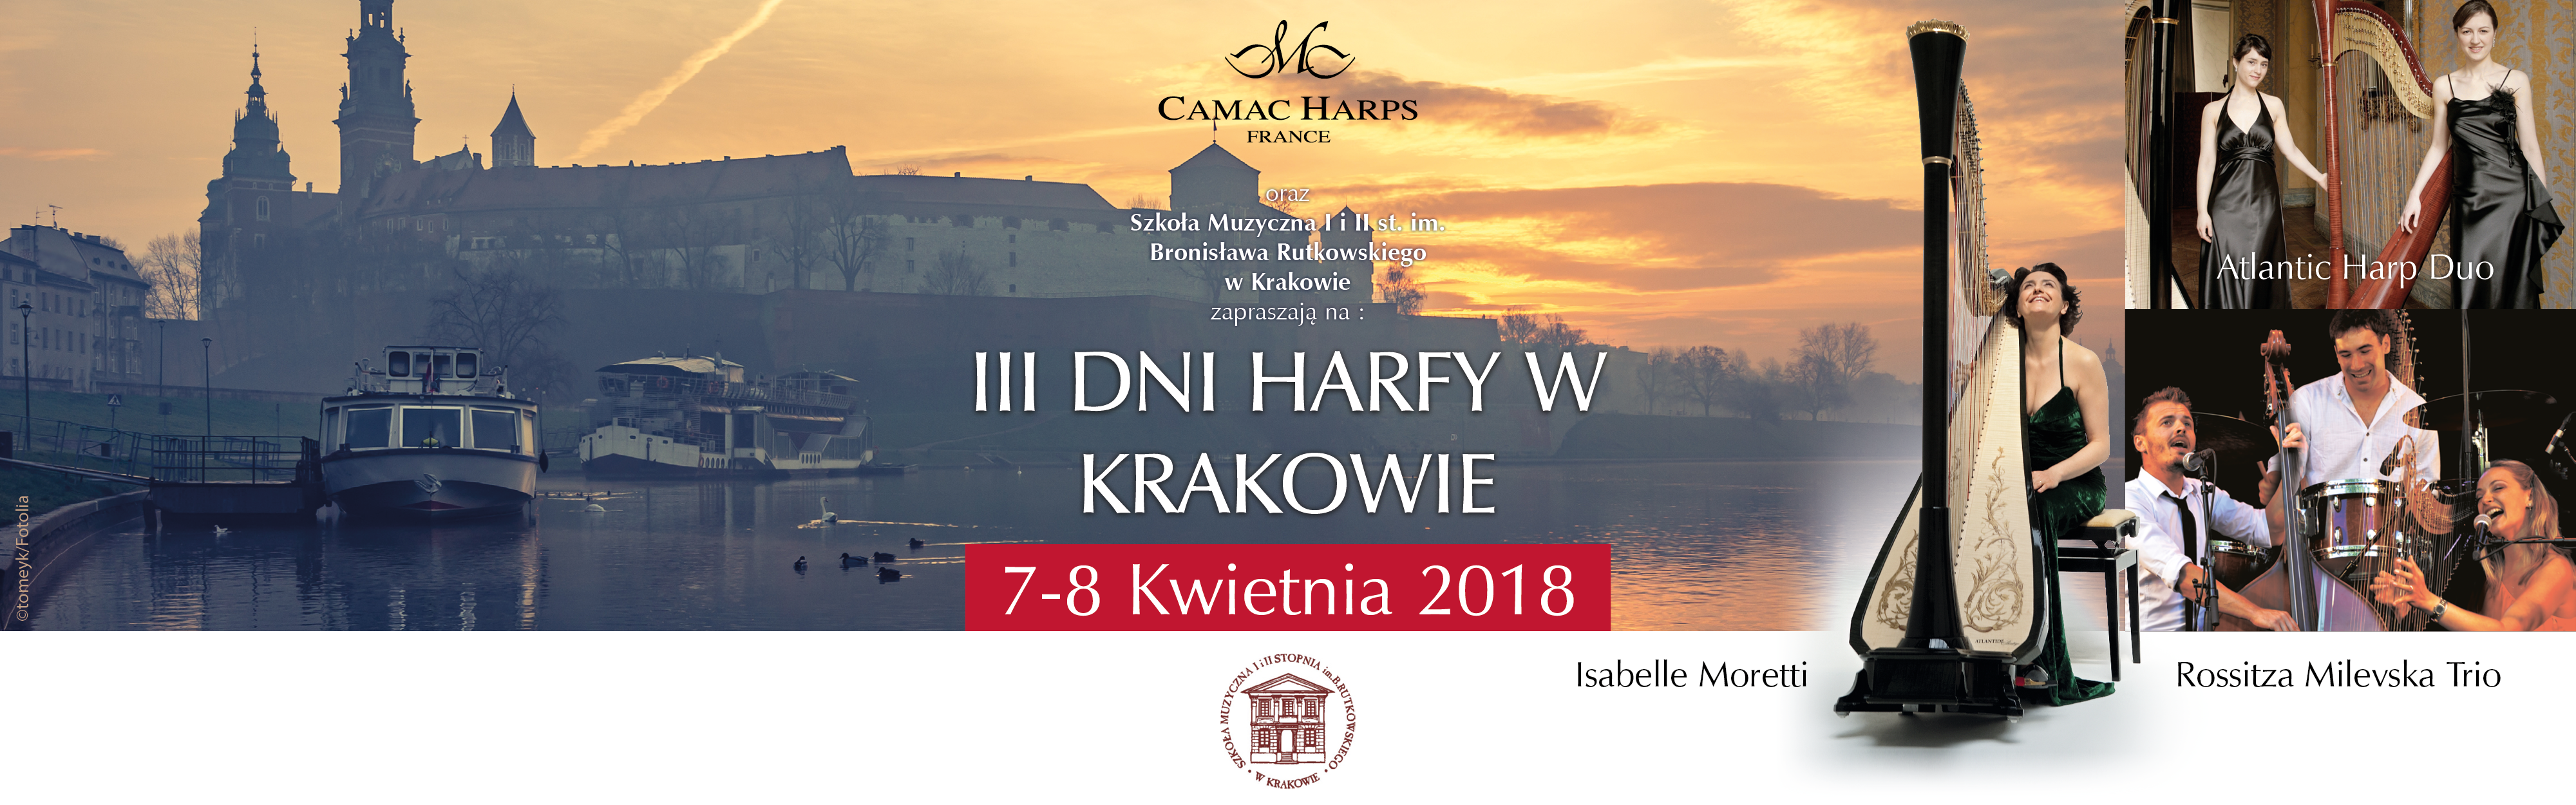 Cracow Harp Days 2018